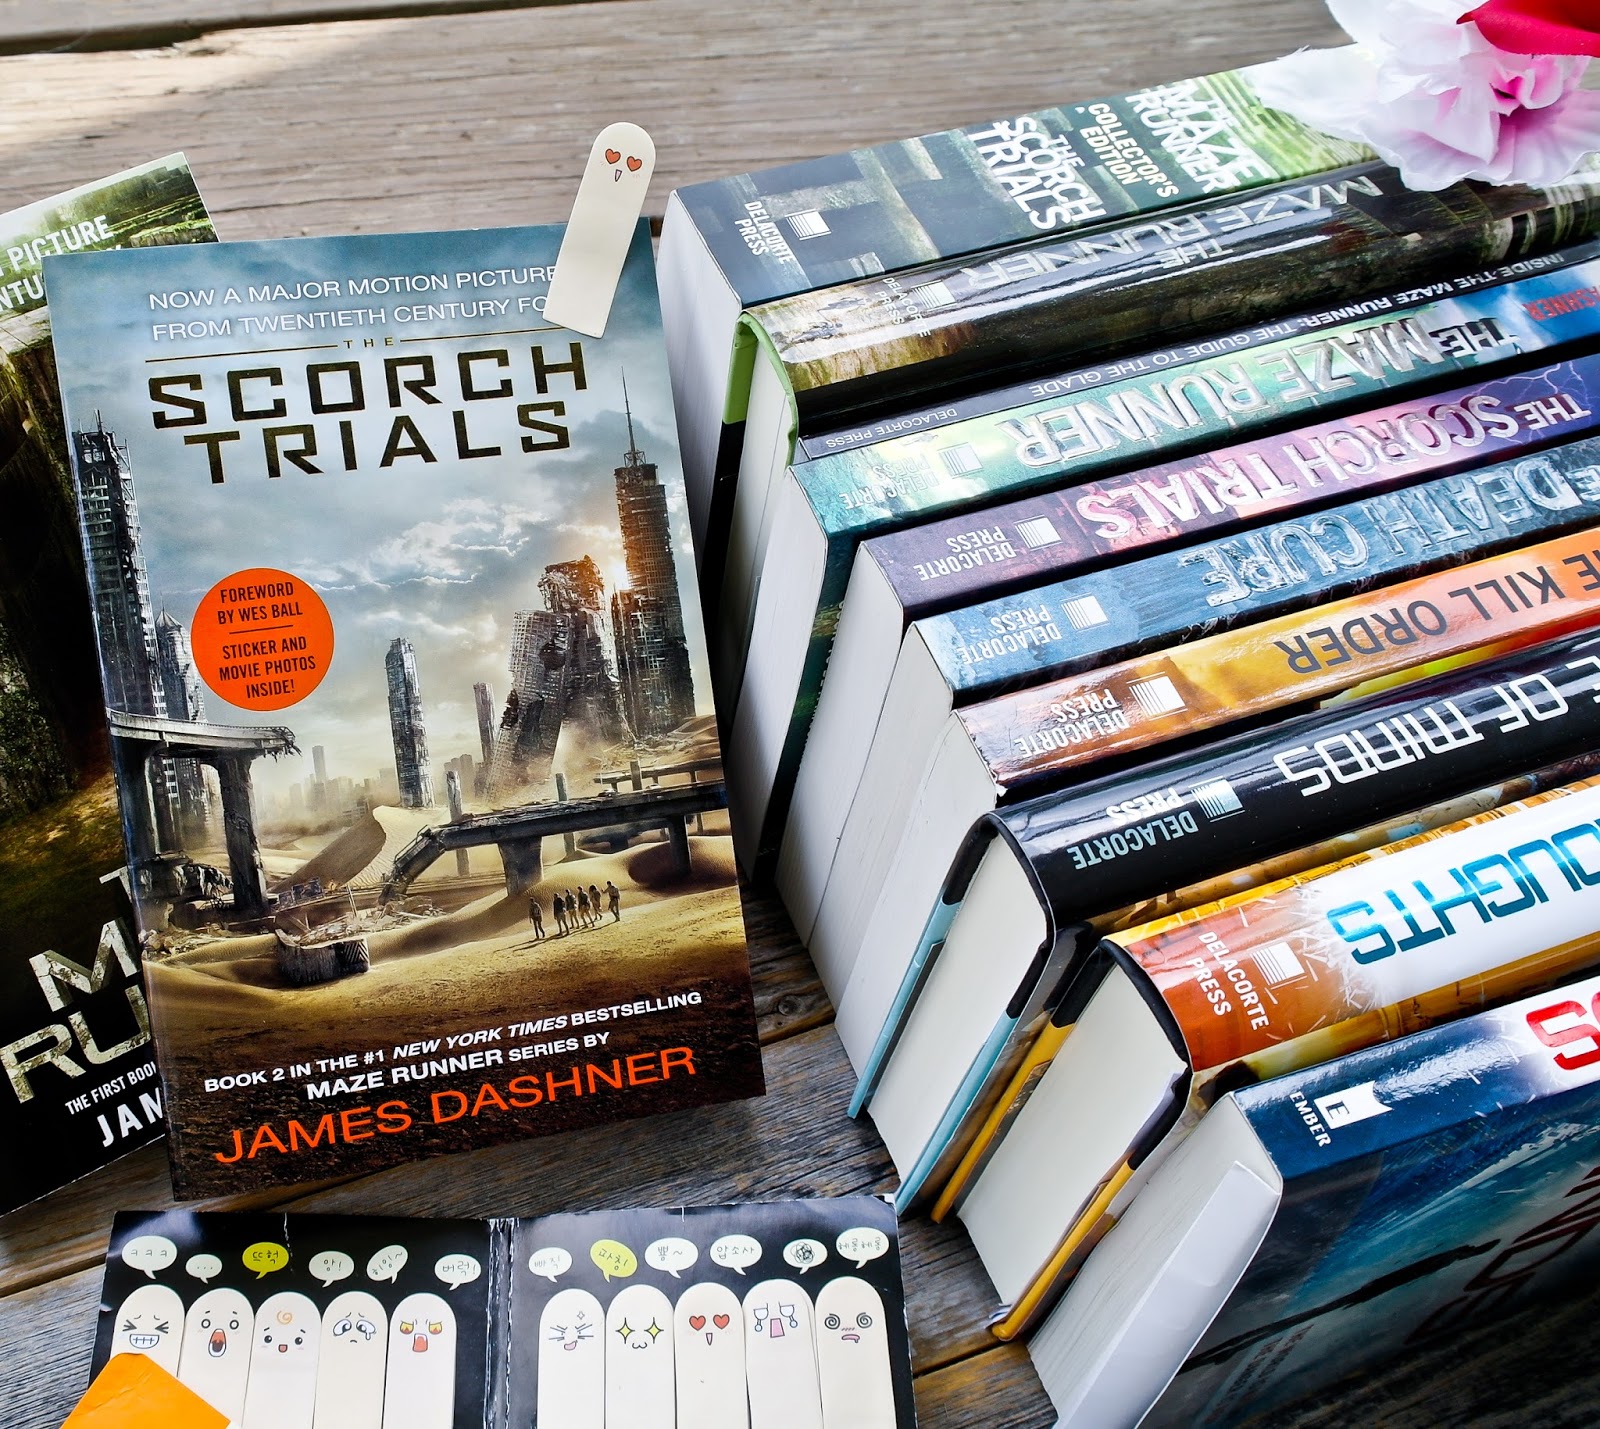 The Scorch Trials (Maze Runner, Book Two) (The Maze Runner Series